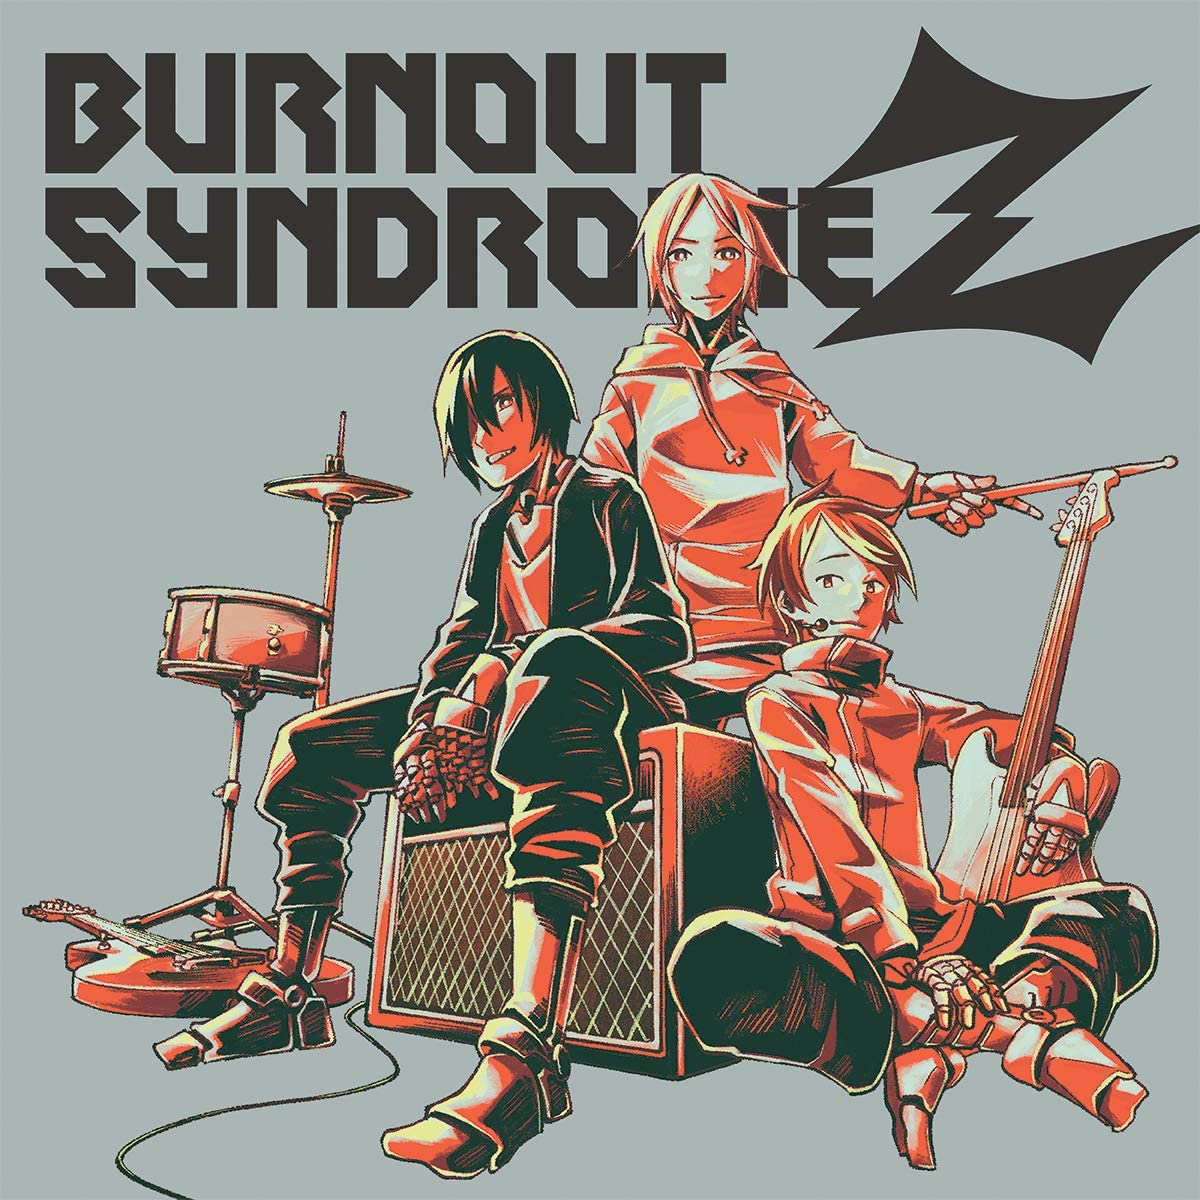 [200324]BURNOUT SYNDROMES BESTアルバム「BURNOUT SYNDROMEZ」[320K]「ハイキュー!!」「銀魂」「Dr.STONE」主题歌収録插图icecomic动漫-云之彼端,约定的地方(´･ᴗ･`)